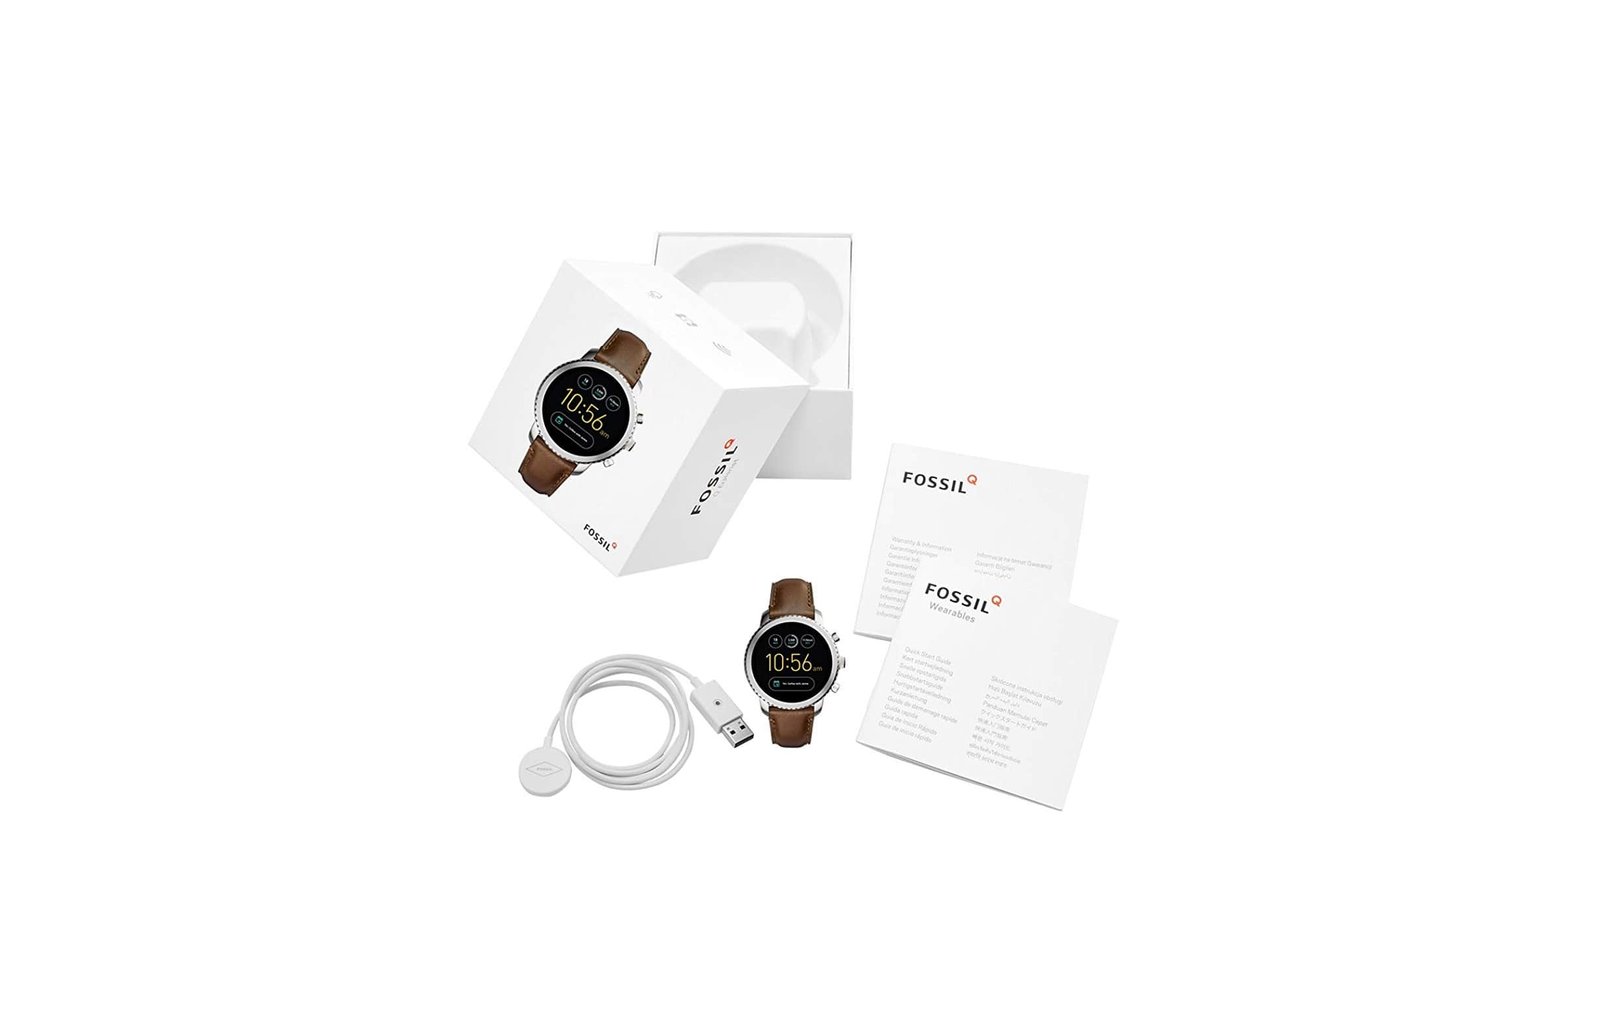 Fossil Men's Gen 3 Explorist Stainless Steel Touchscreen Smartwatch -min (1)